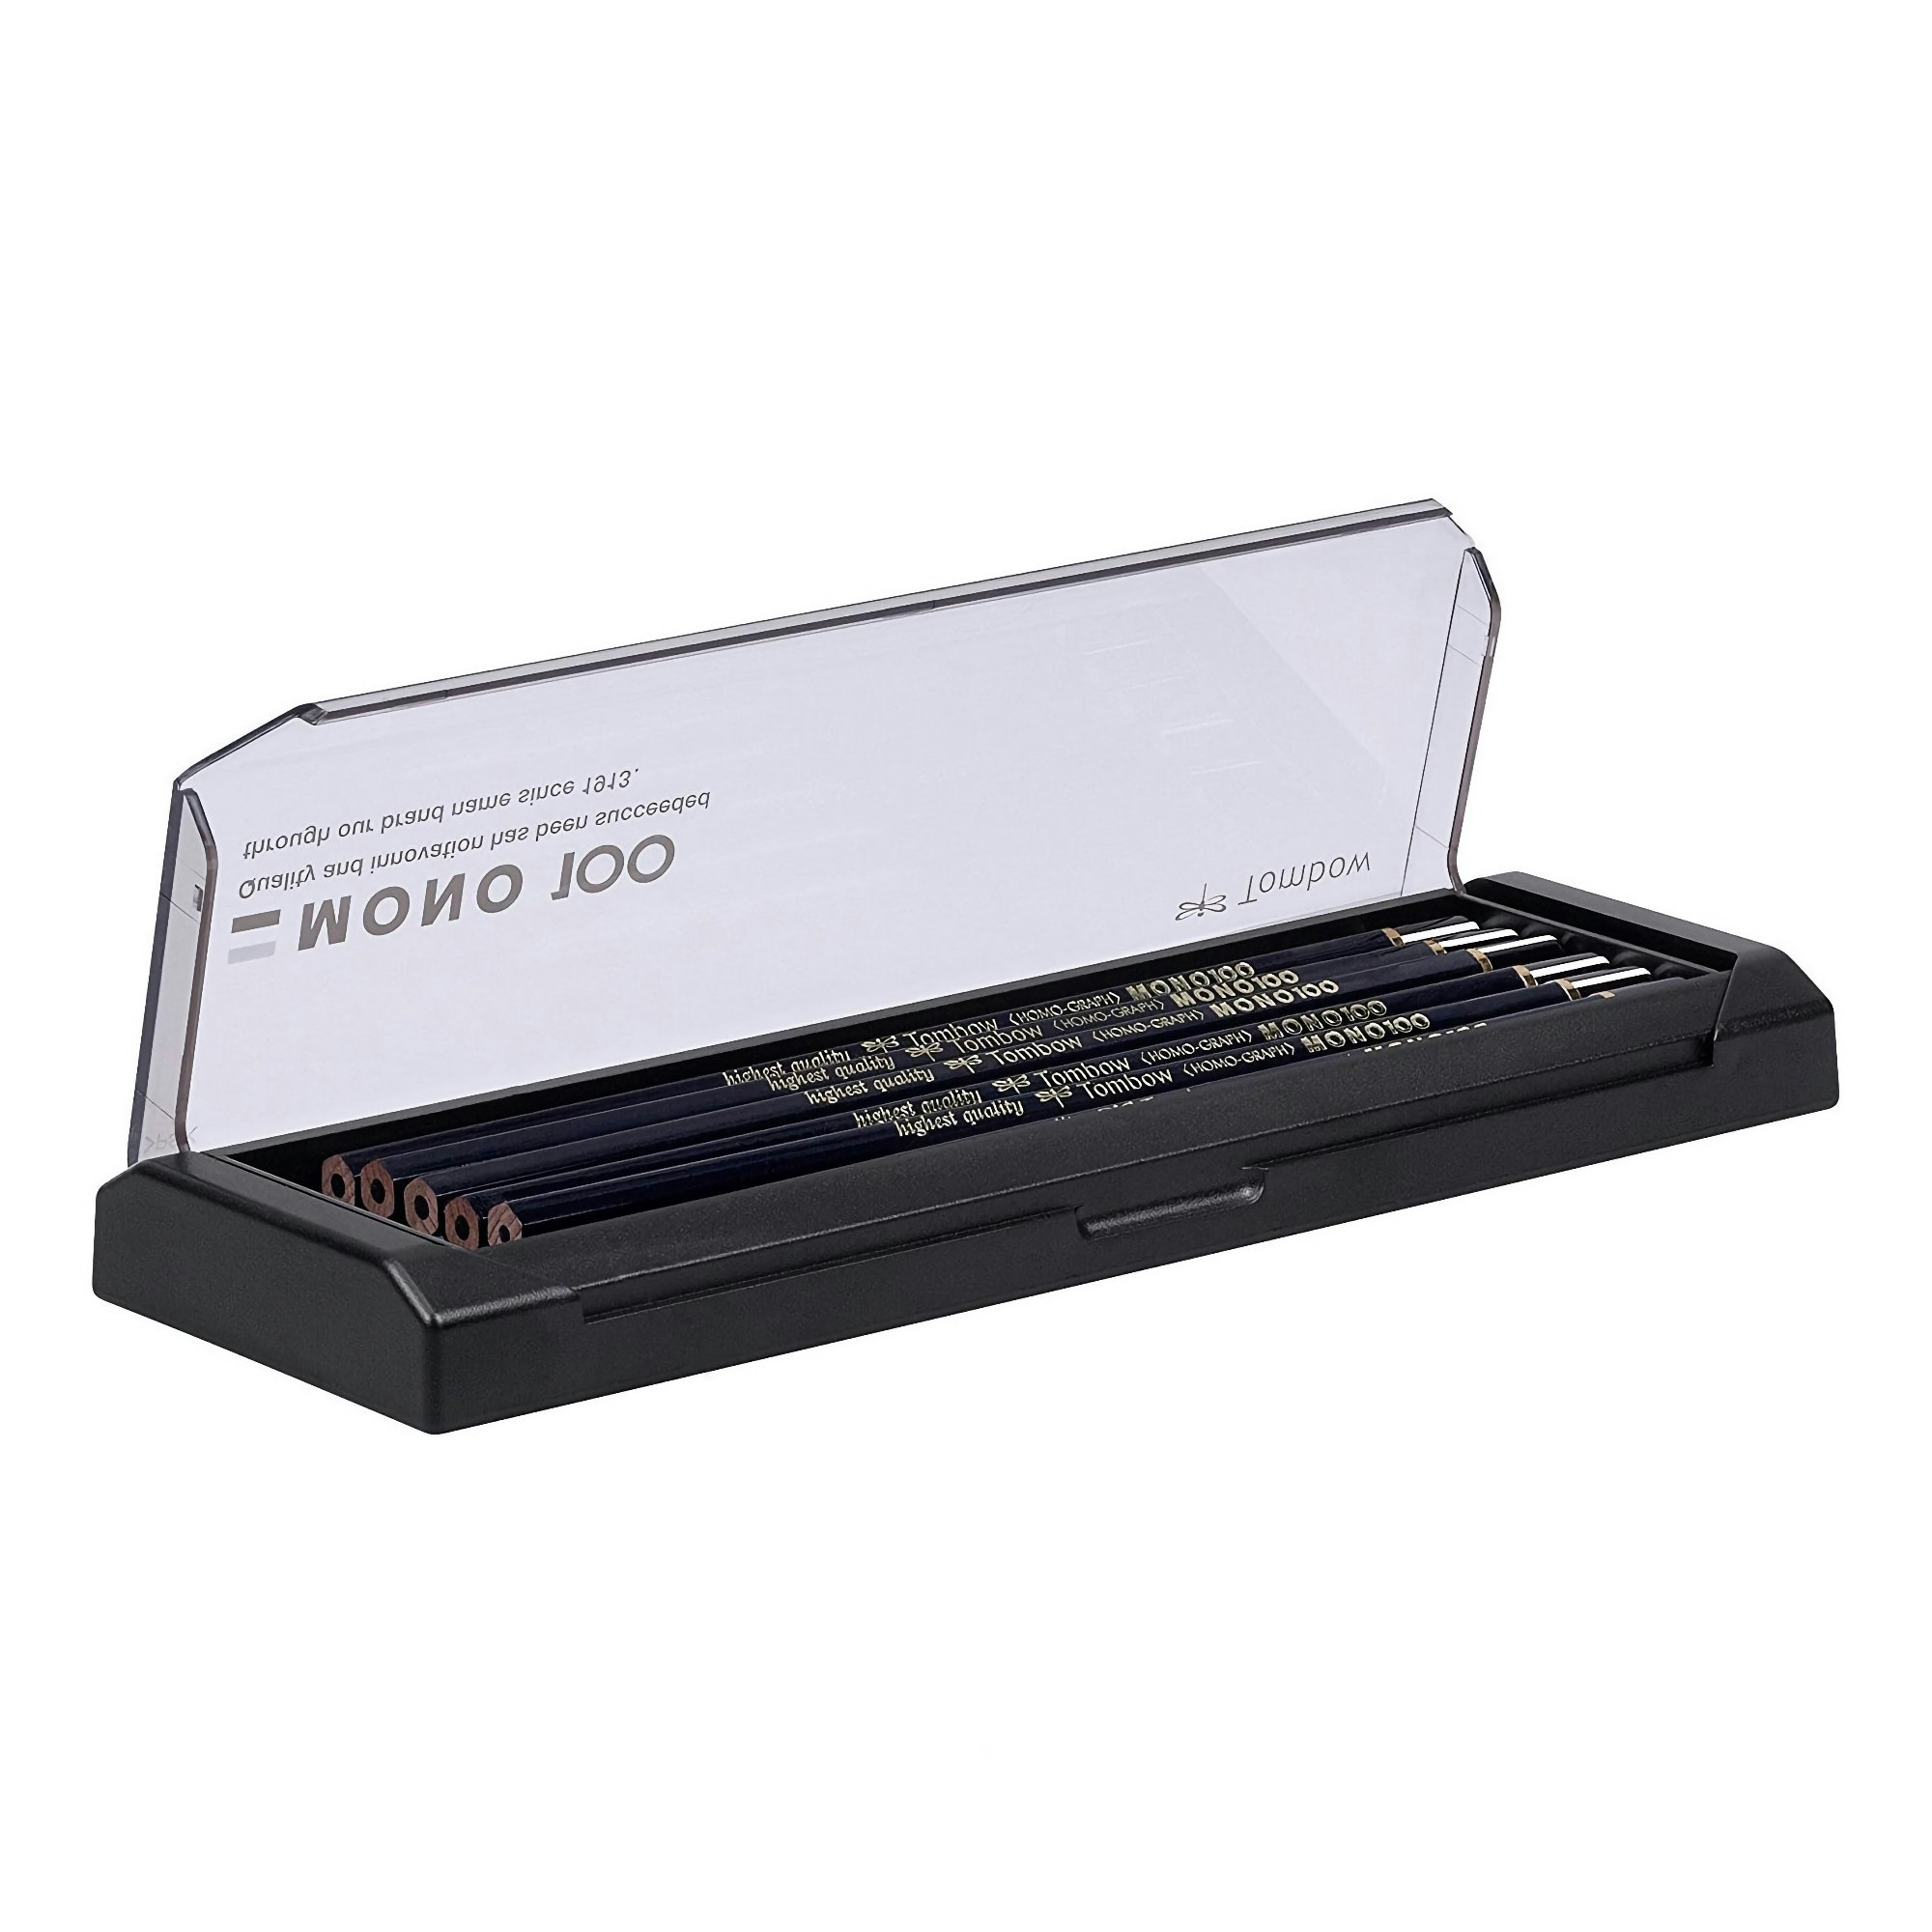 Tombow Mono 100 Pencil – 5B – set om 12